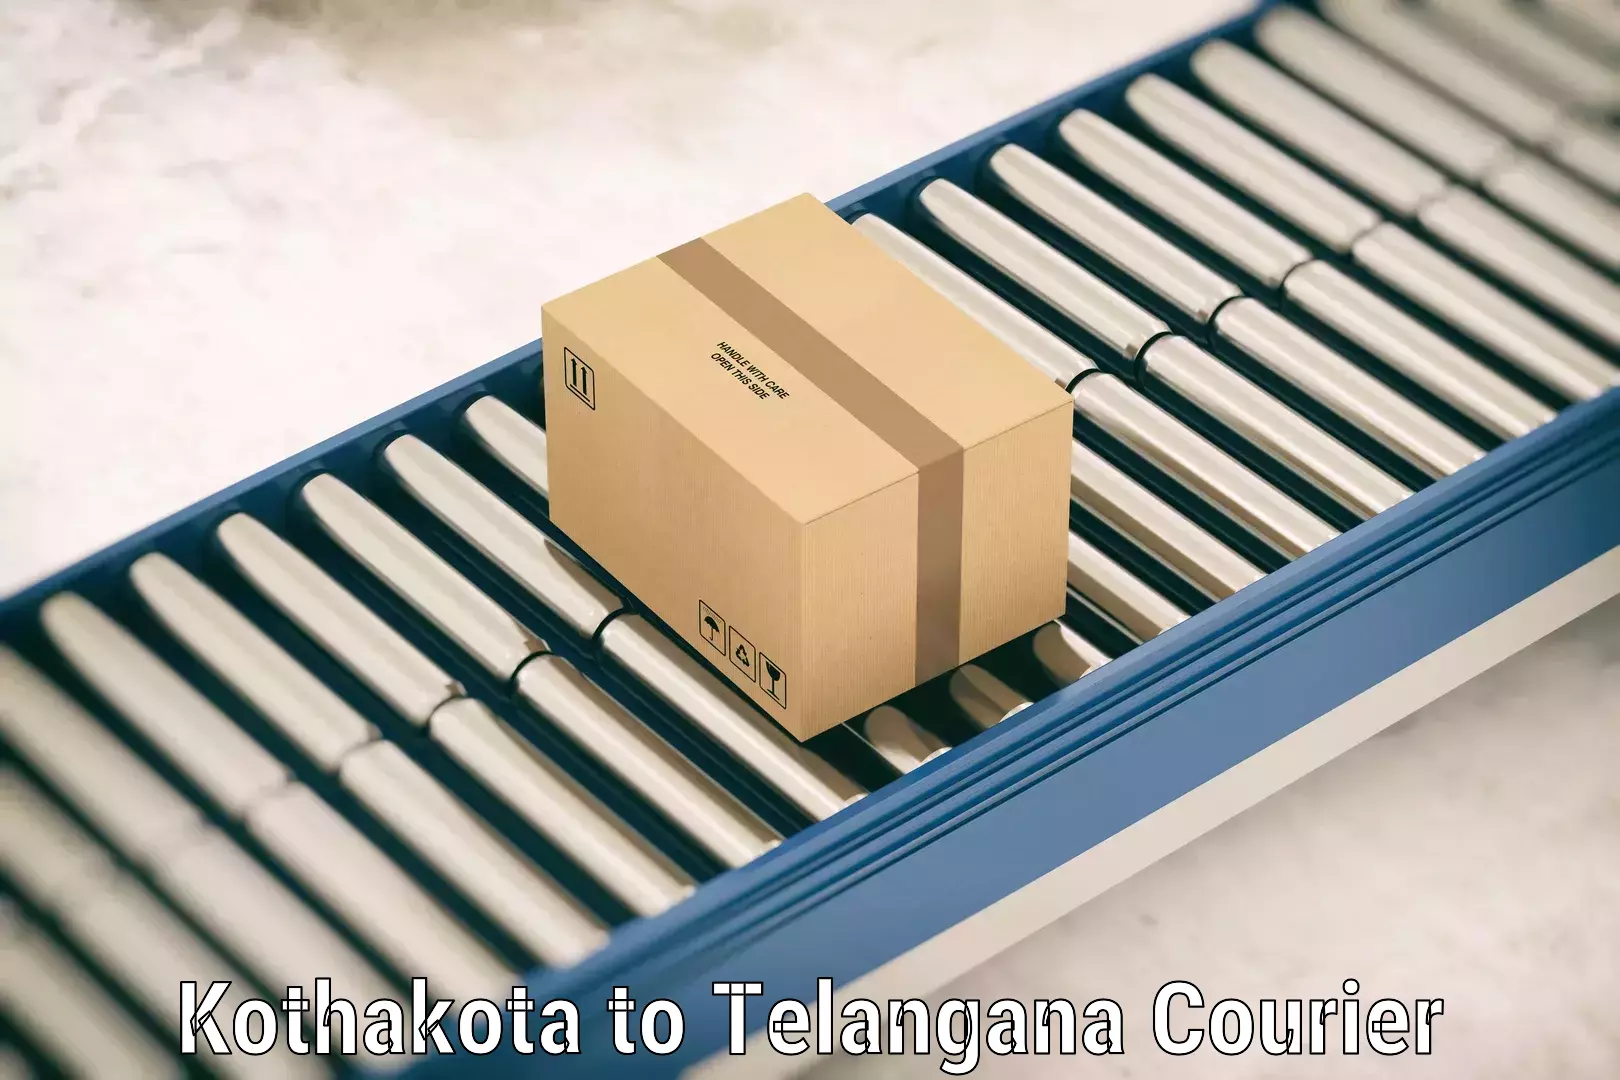 Luggage delivery network Kothakota to Patancheru